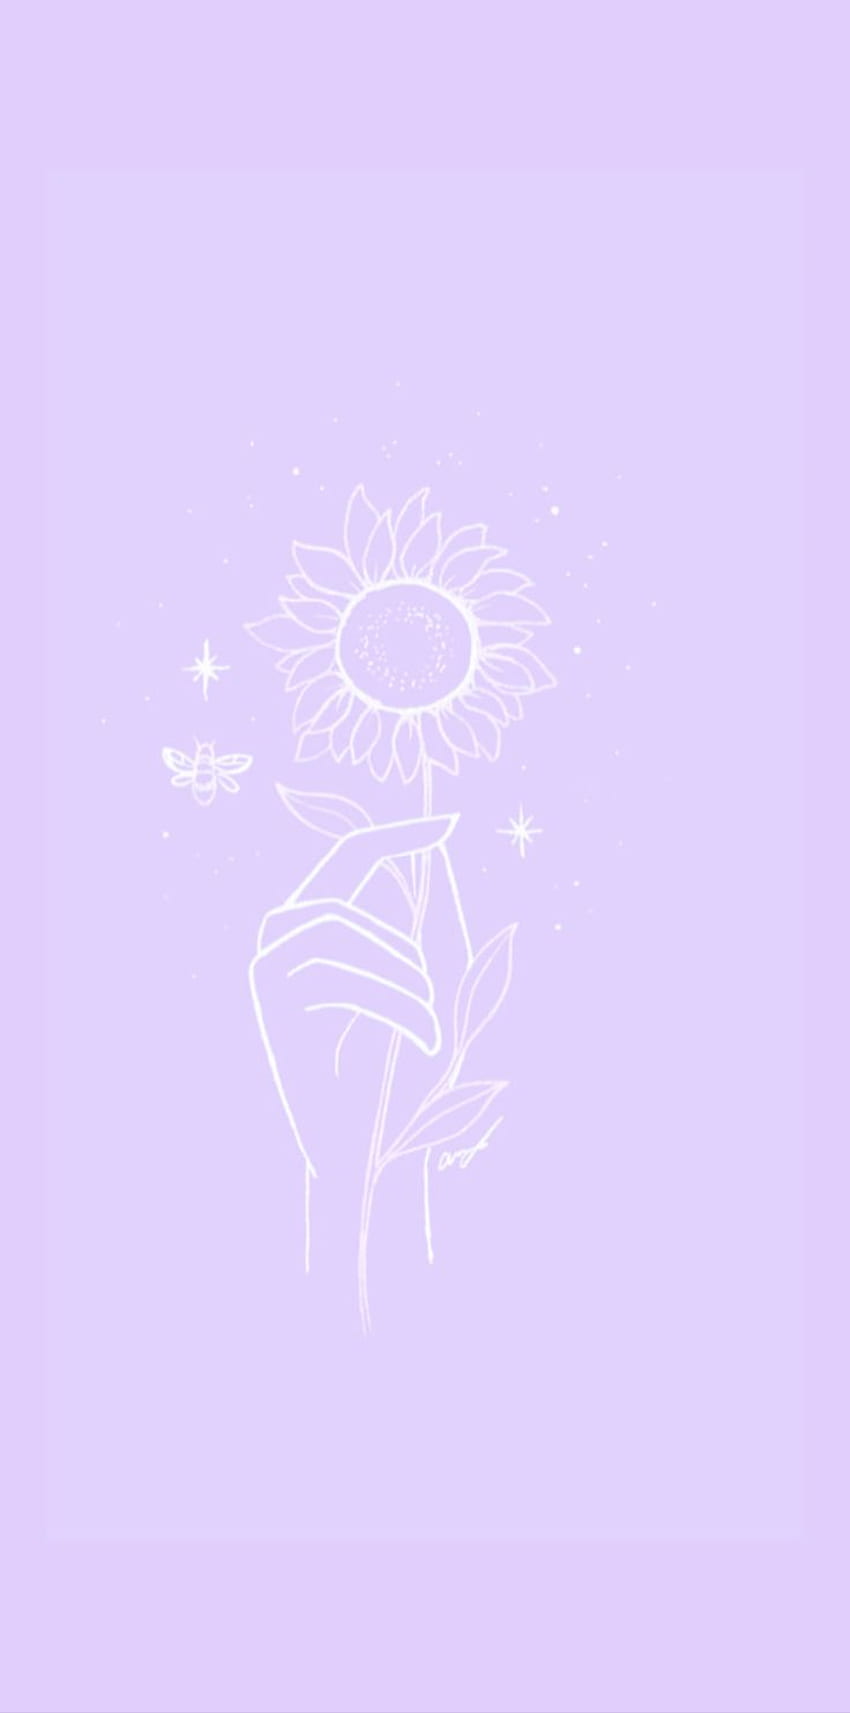 A hand holding up the sunflower on purple background - Light purple, pastel purple